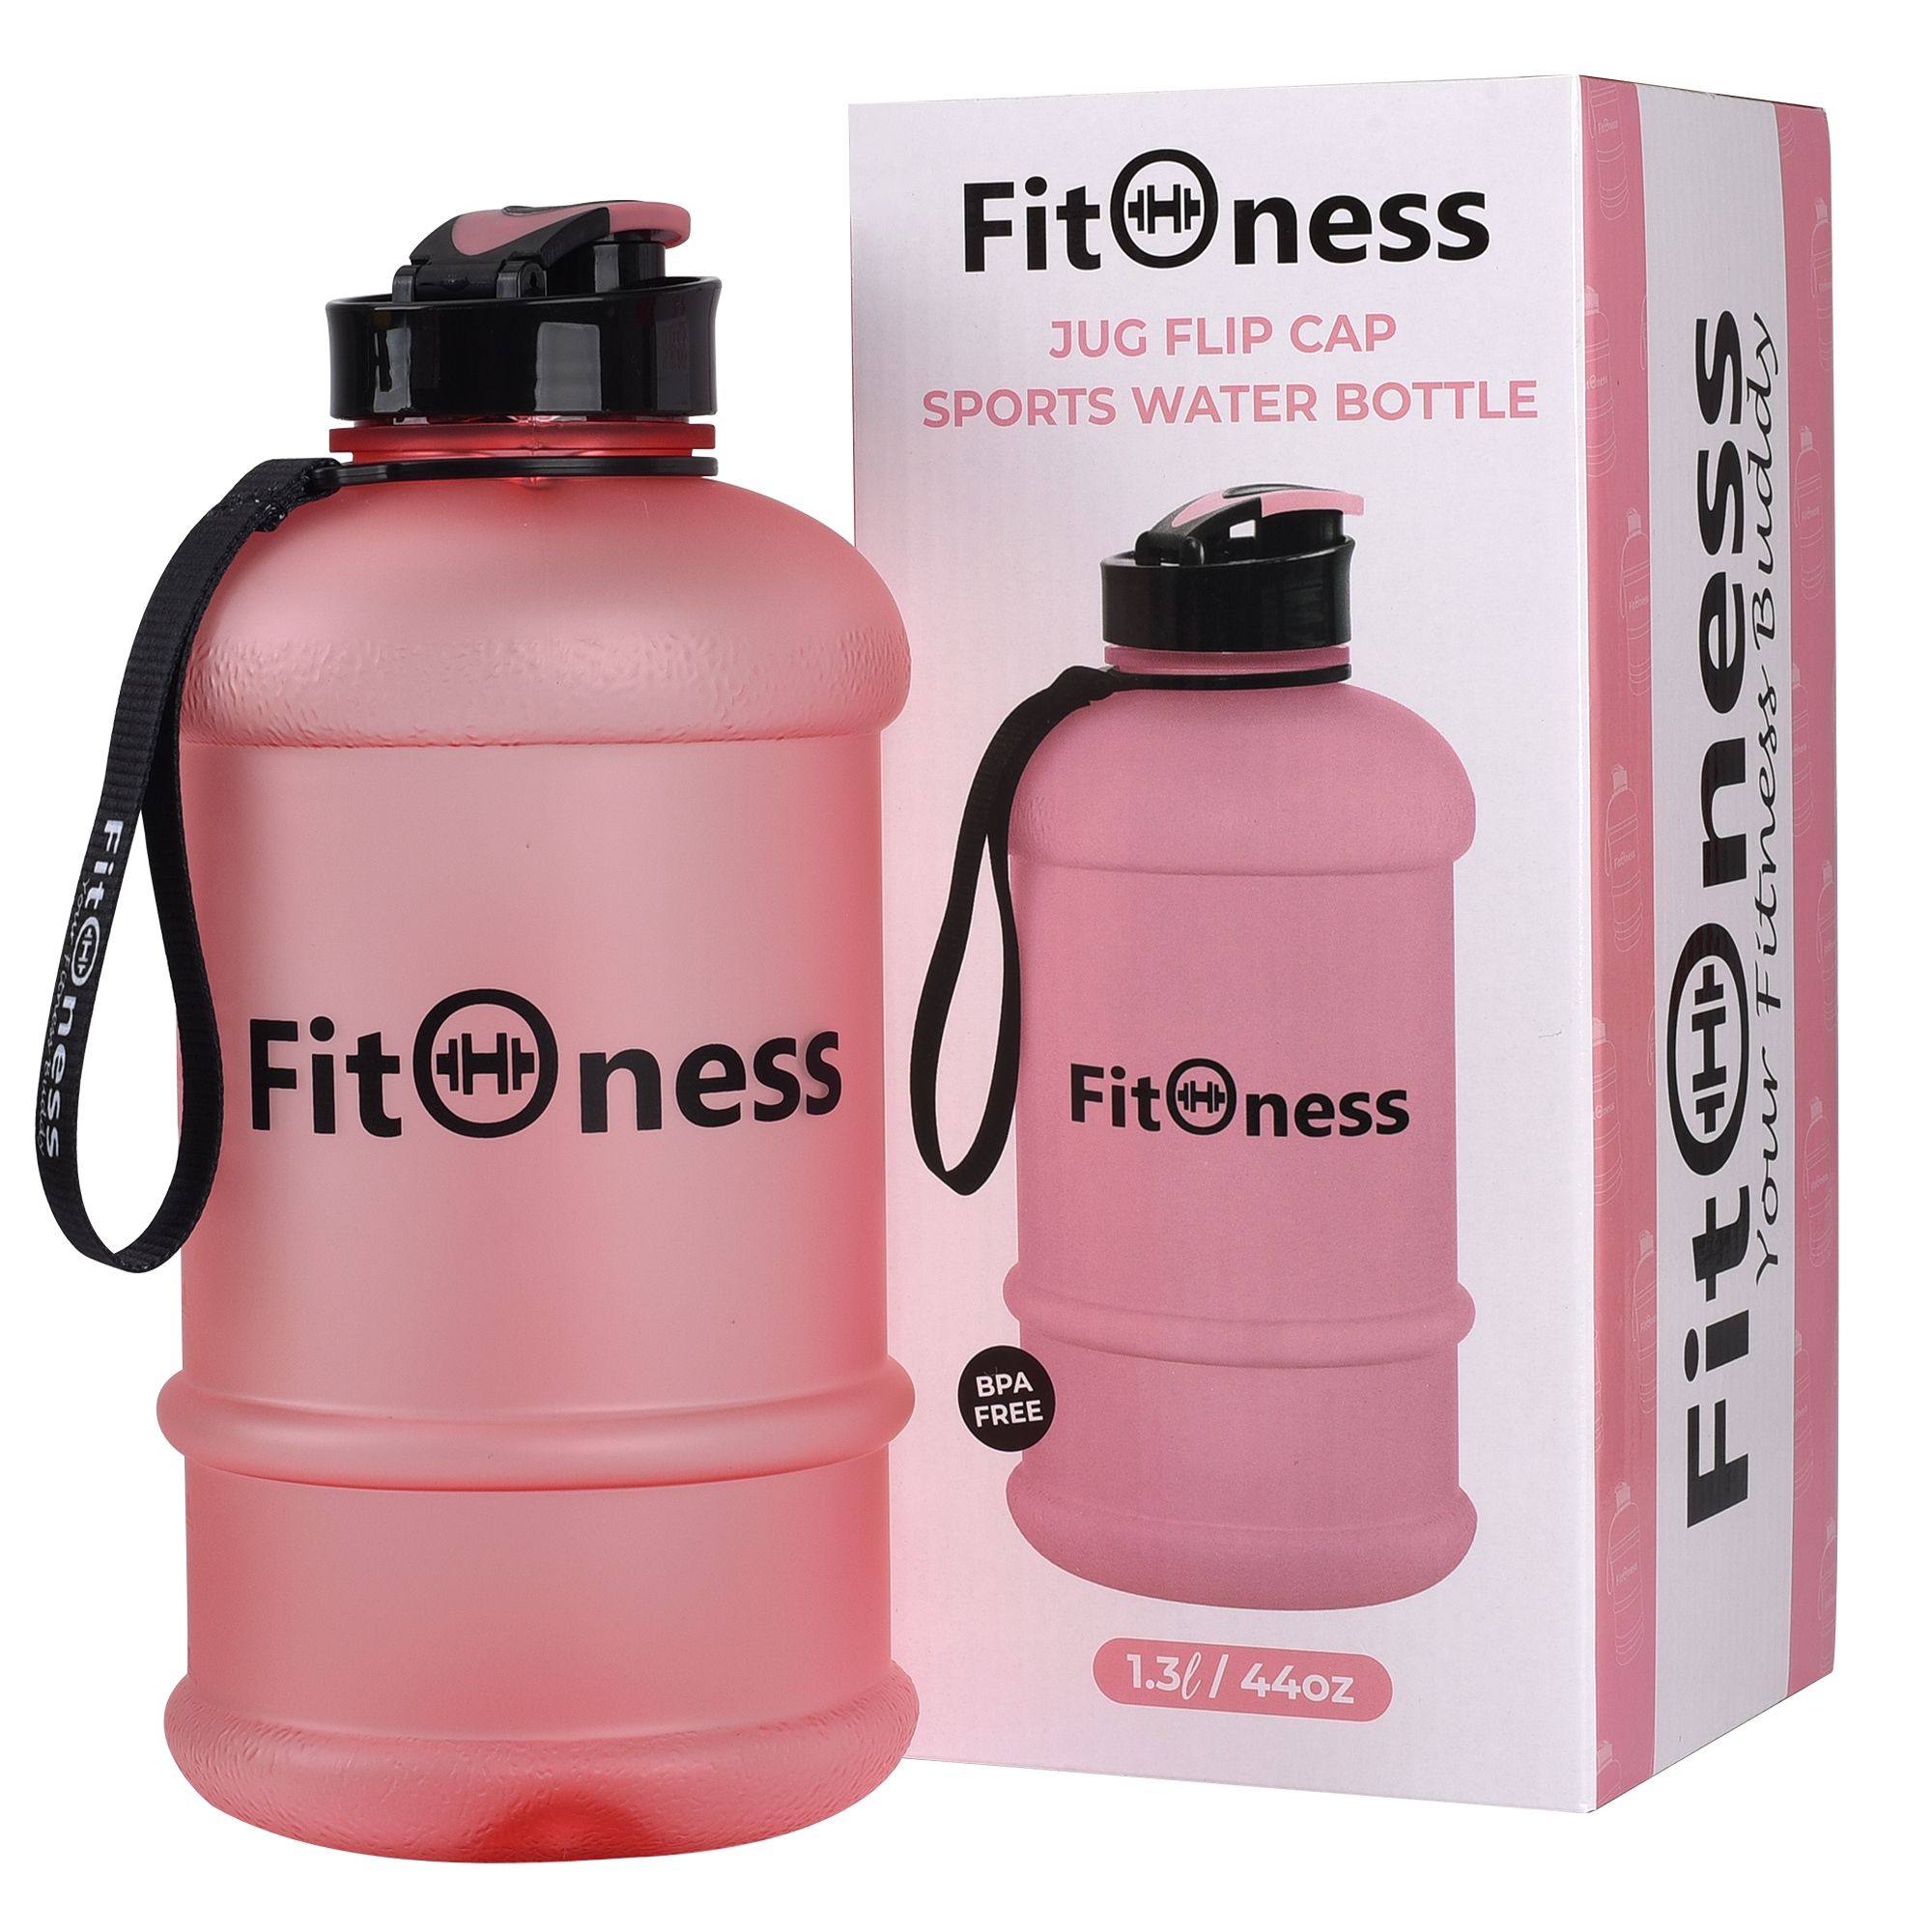 Brand Fitoness Jug Bottle 1.3l / 44oz Pink Sports